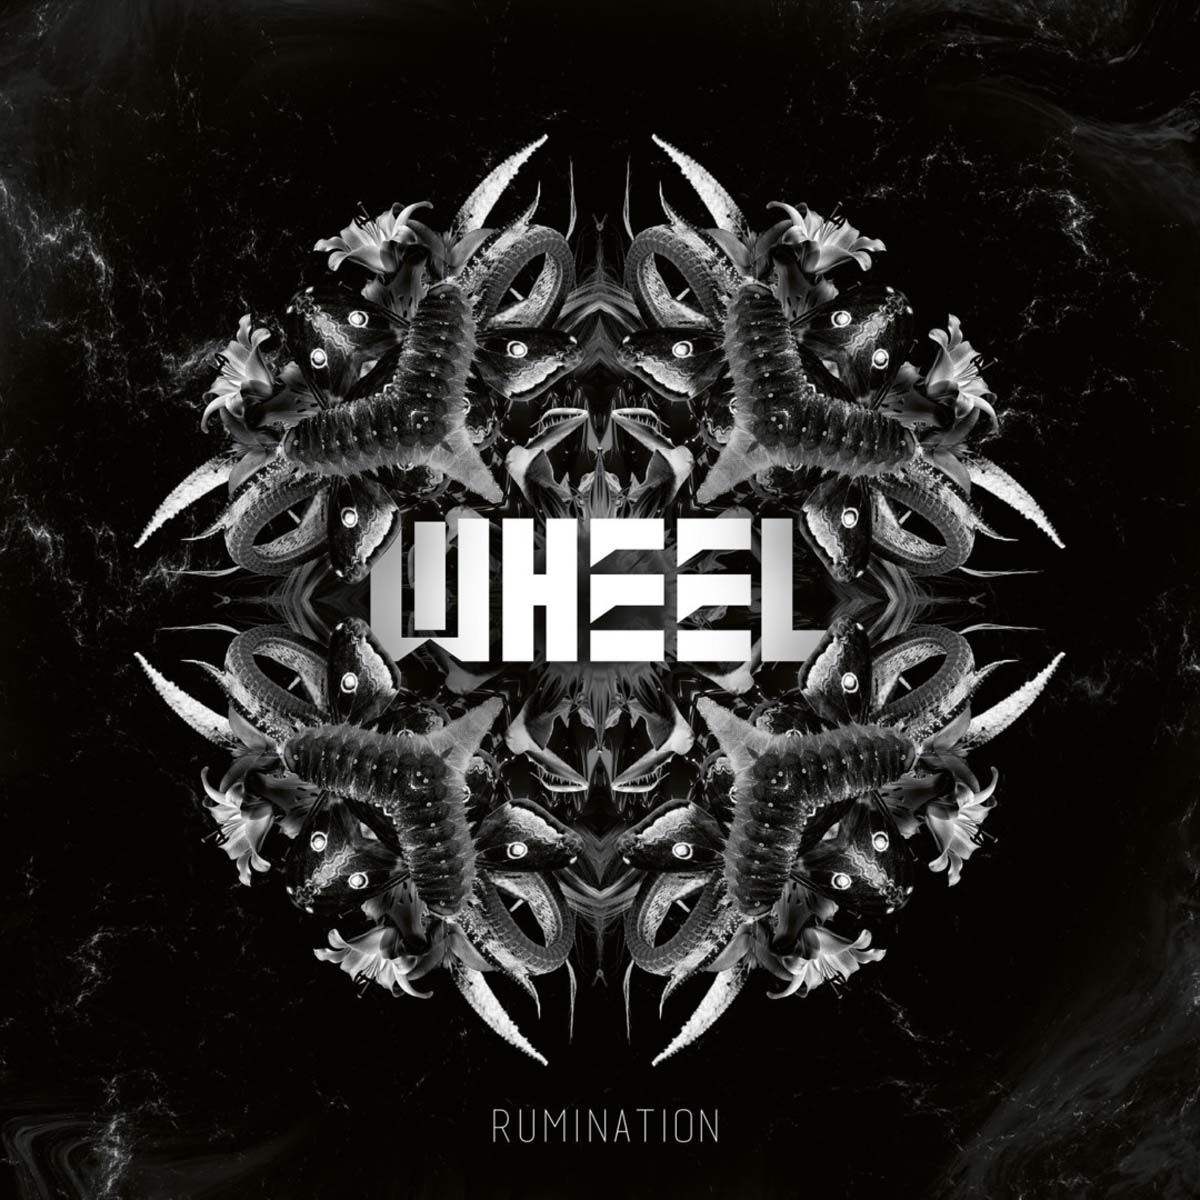 Wheel - Rumination